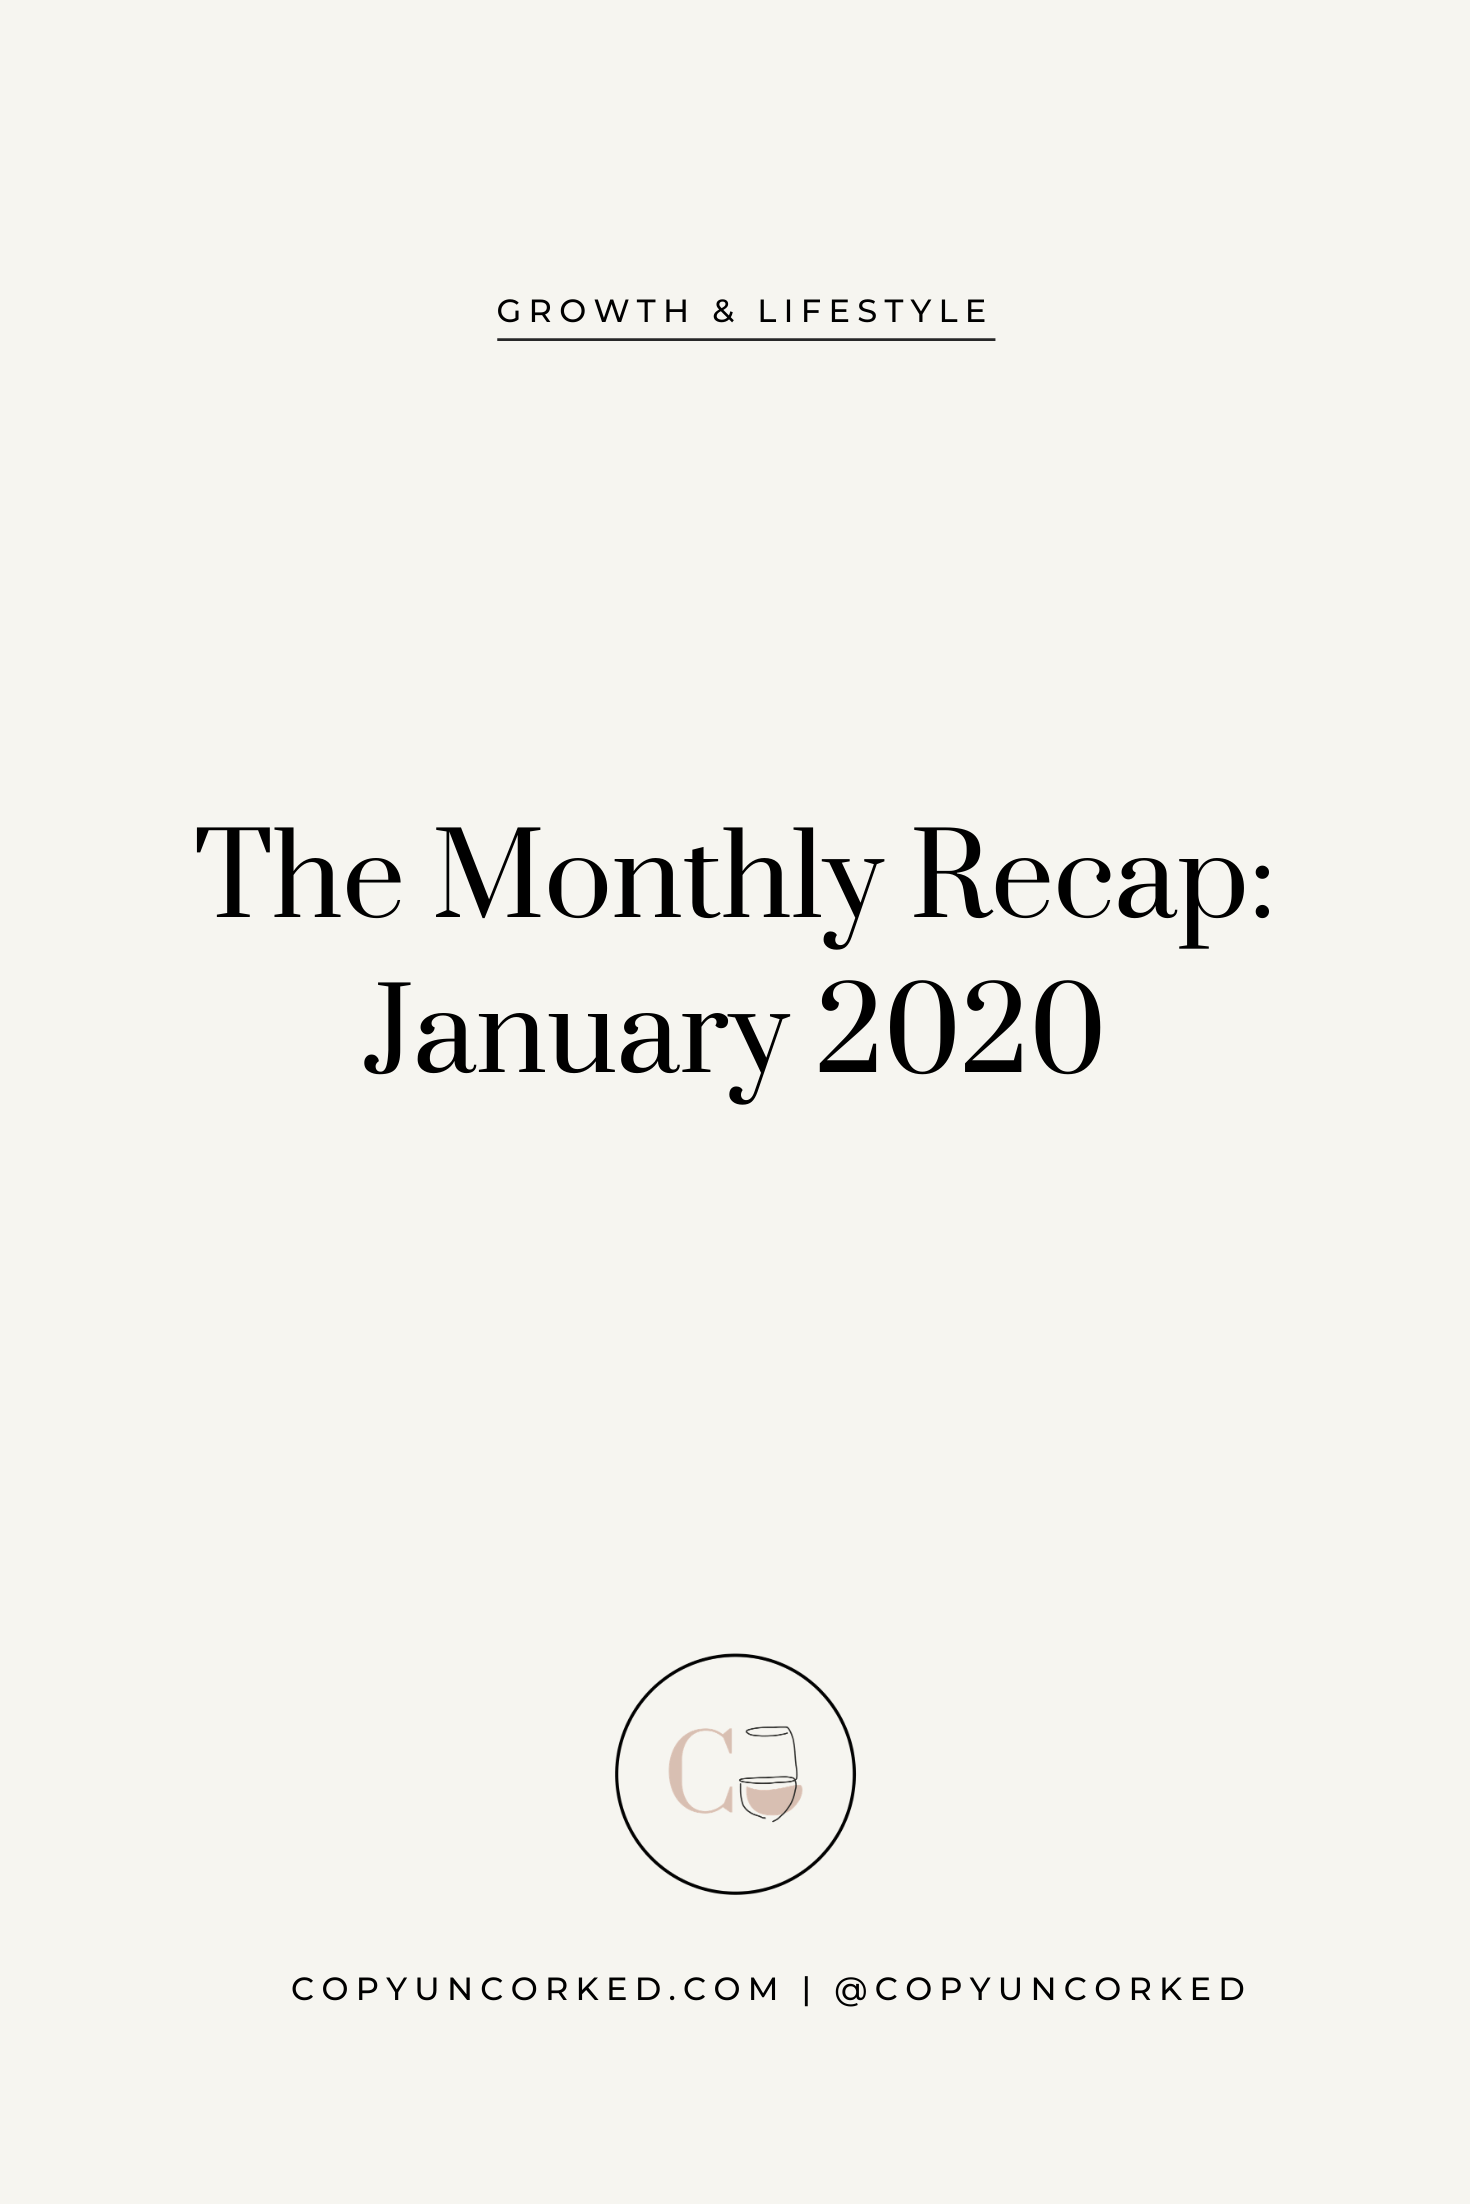 The Monthly Recap - January 2020 - copyuncorked.com